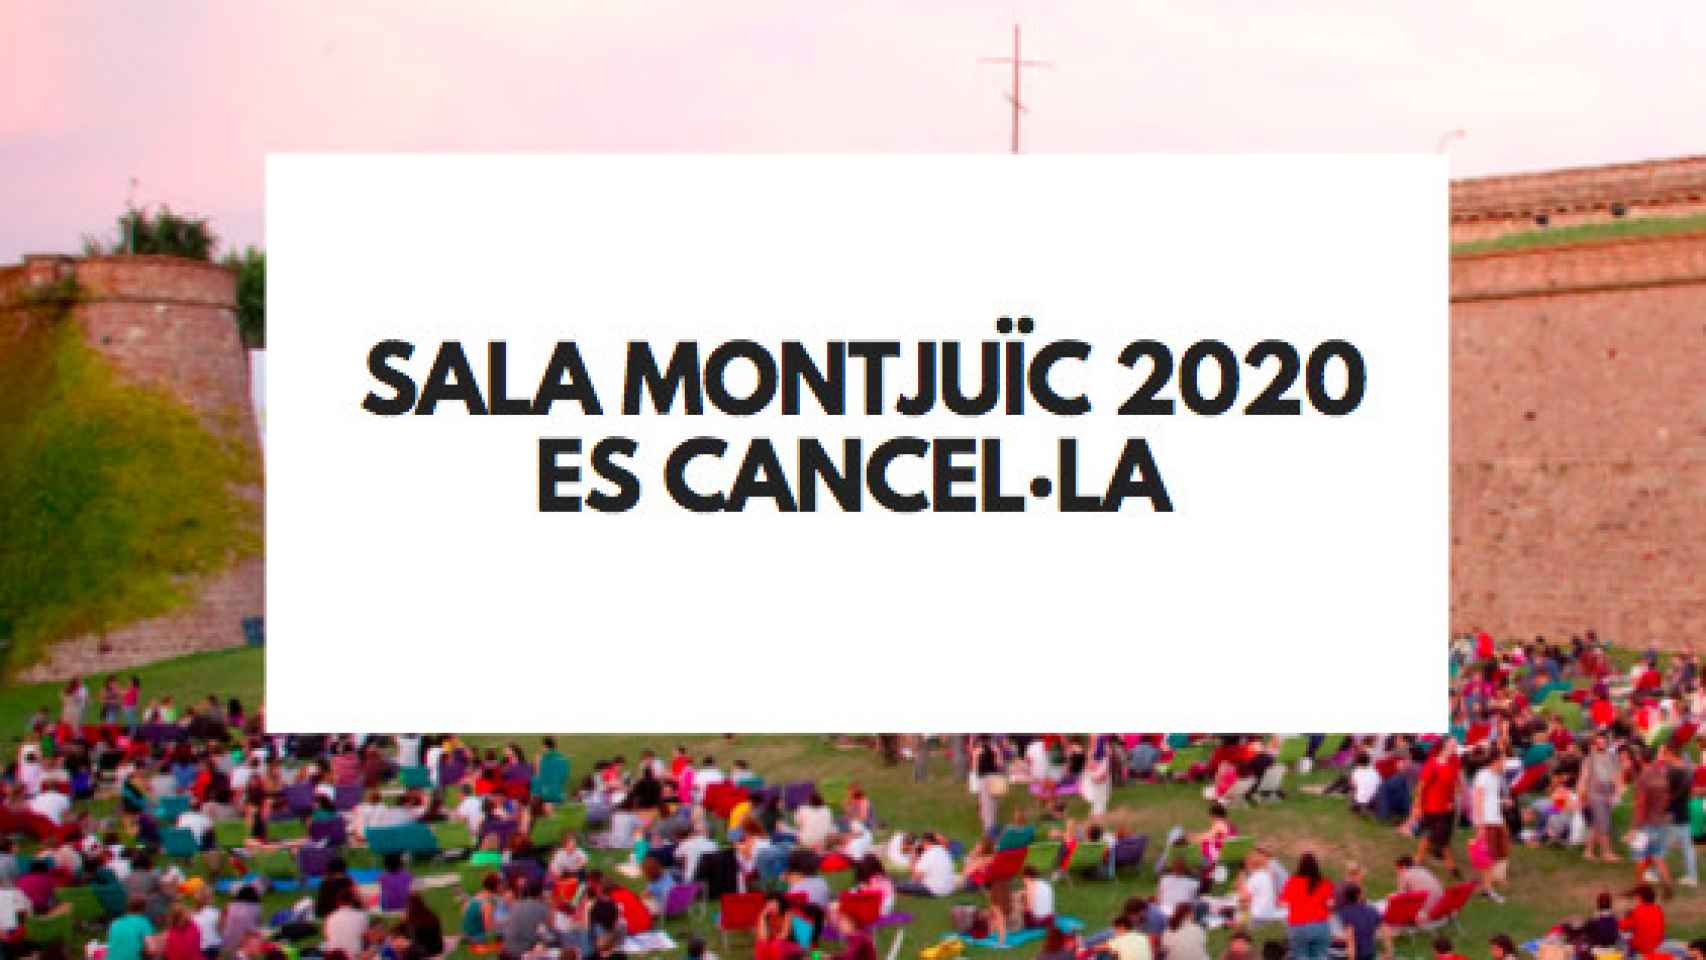 Sala Montjuïc se cancela por los rebrotes en Barcelona